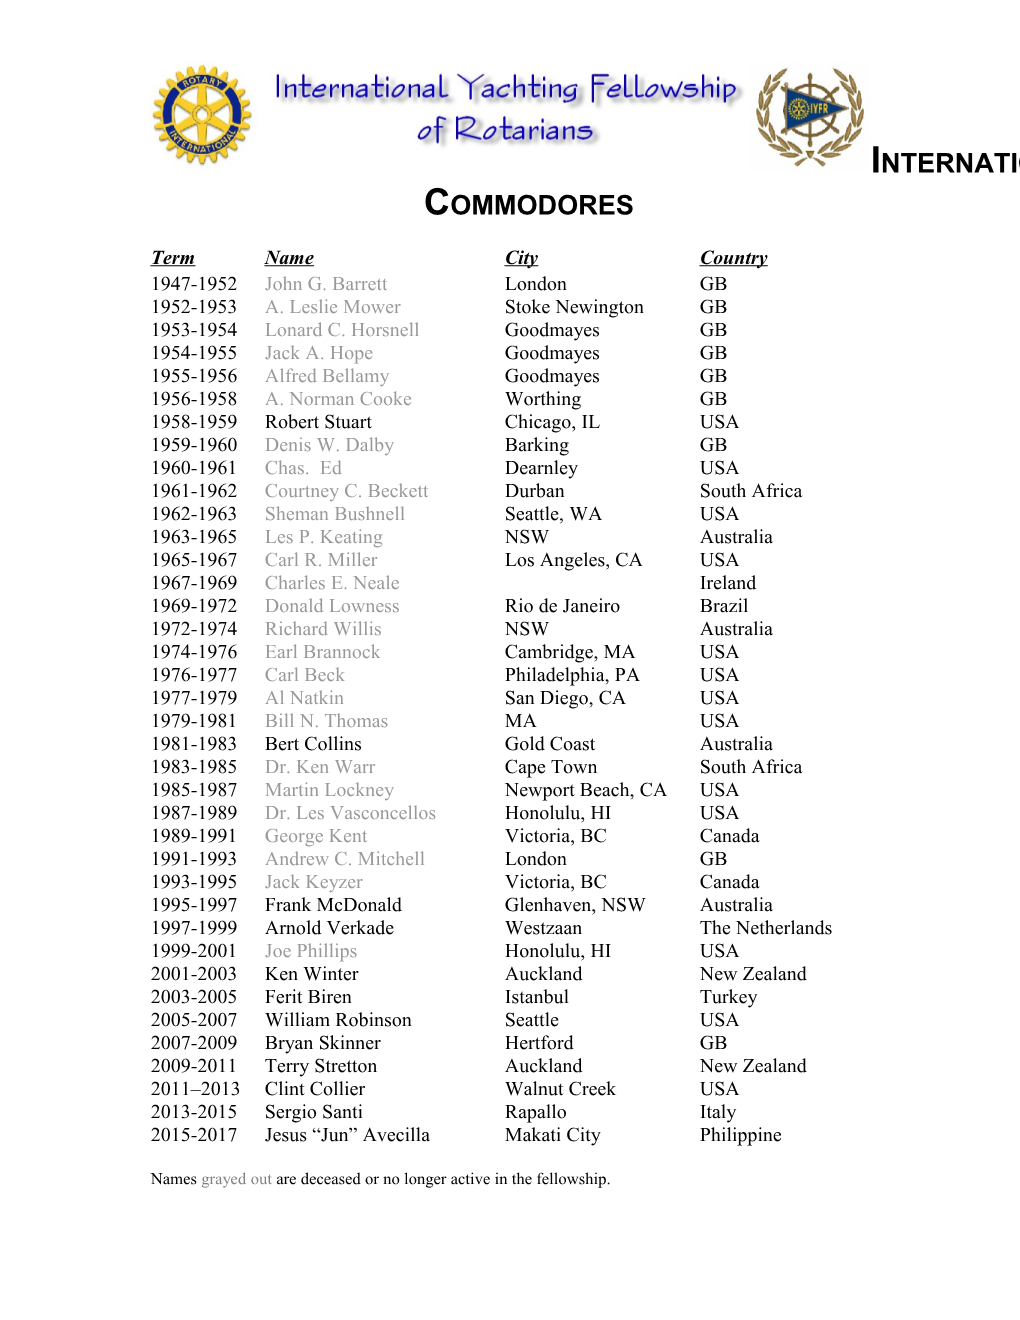 International Commodores